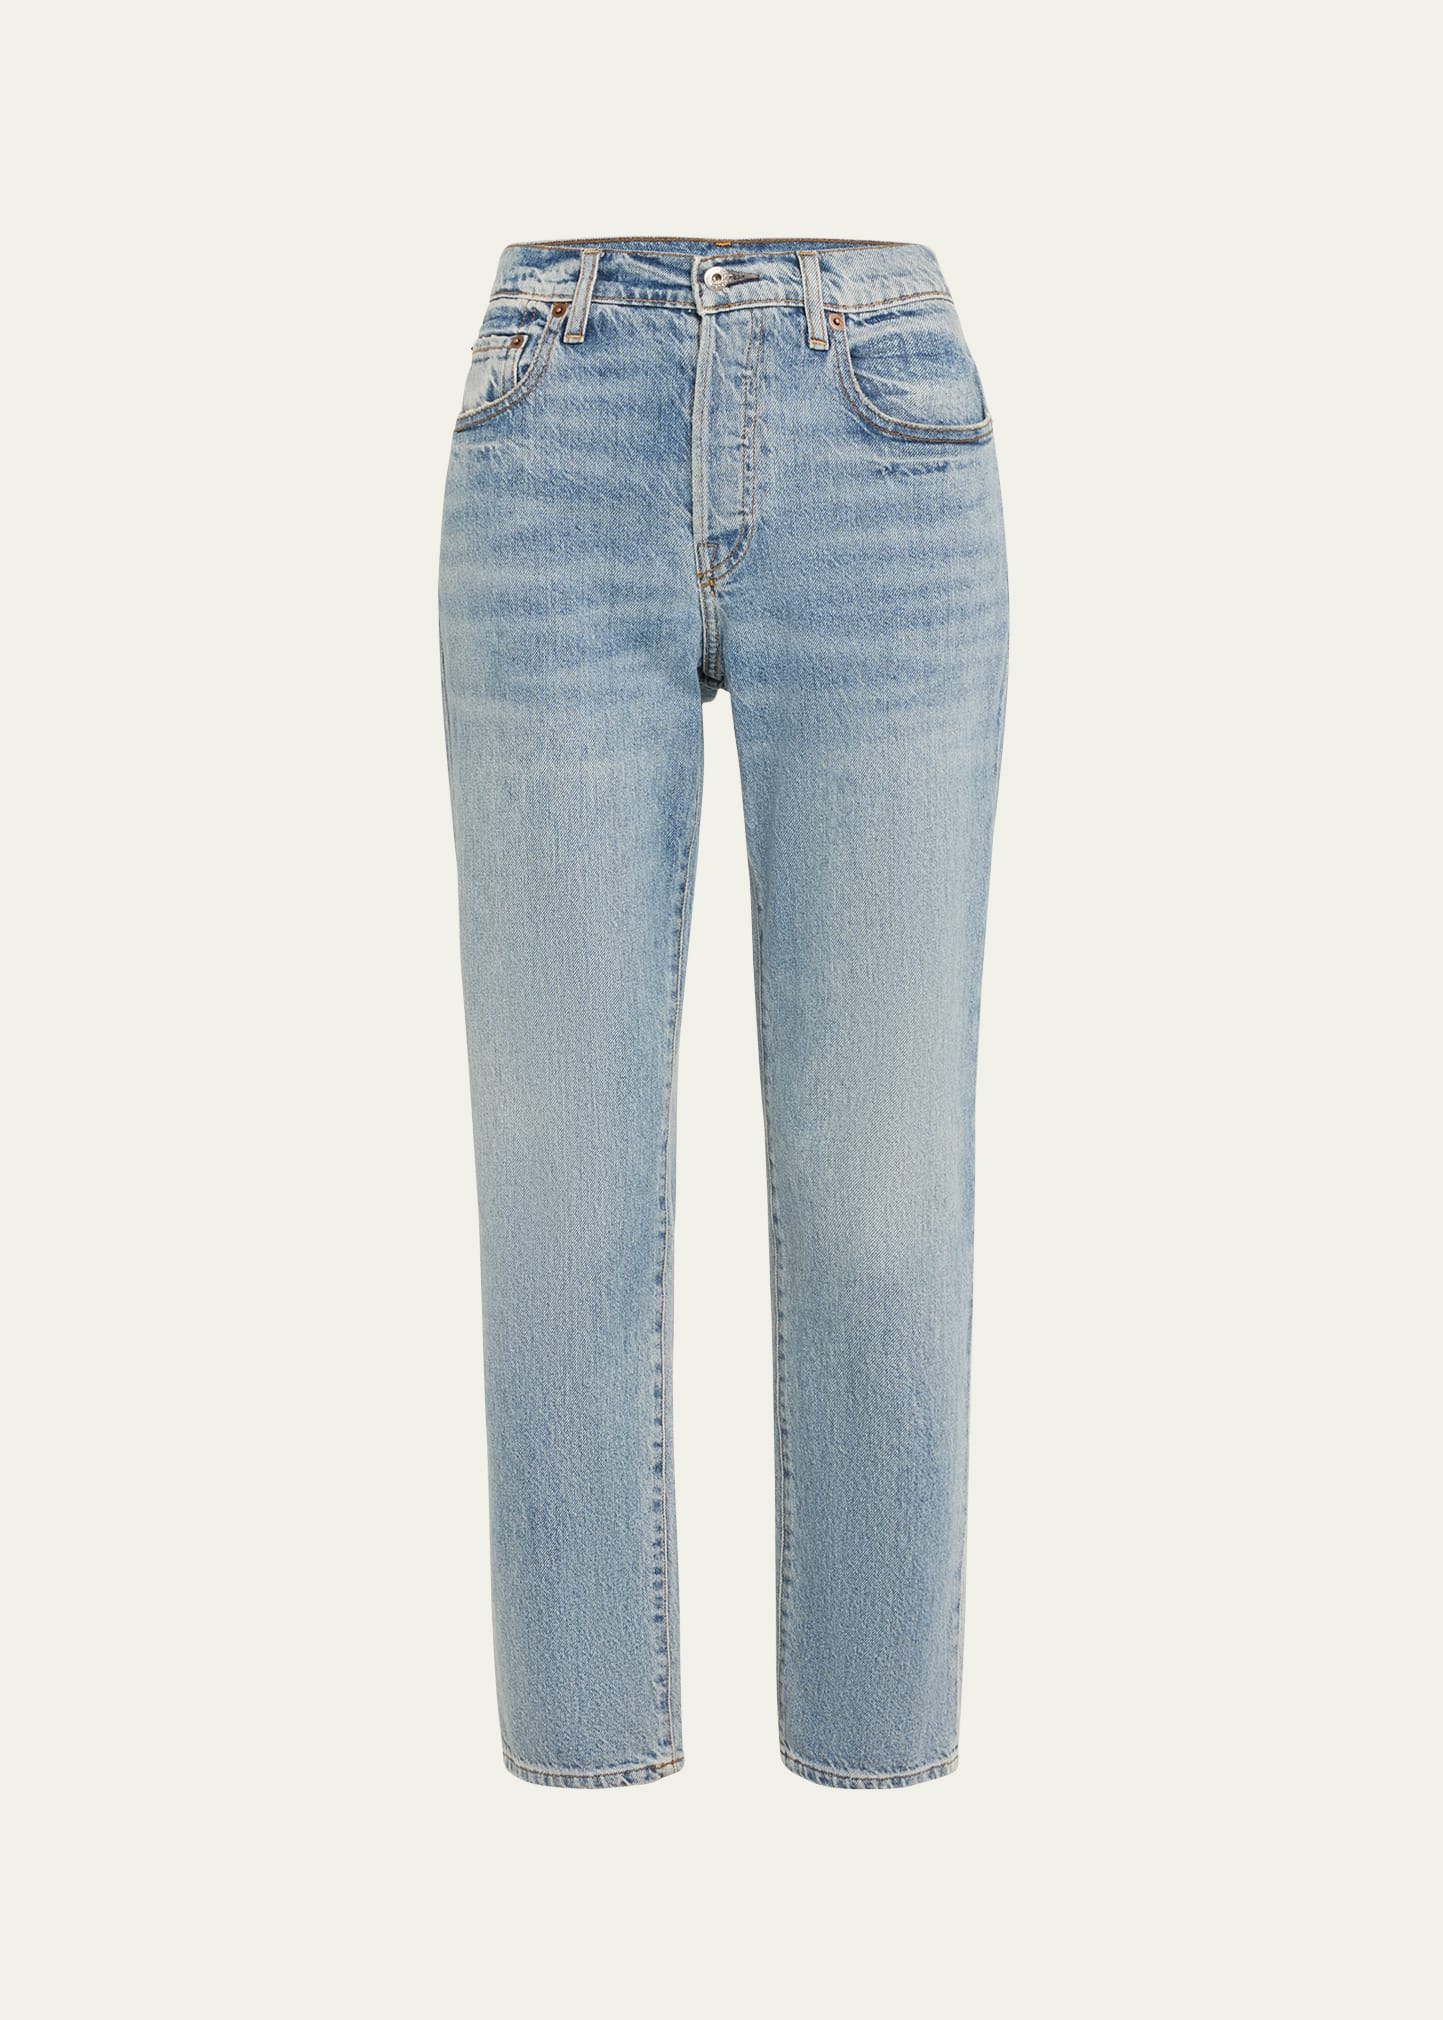 Delta Giant 5-Pocket Wide-Leg Denim Jeans